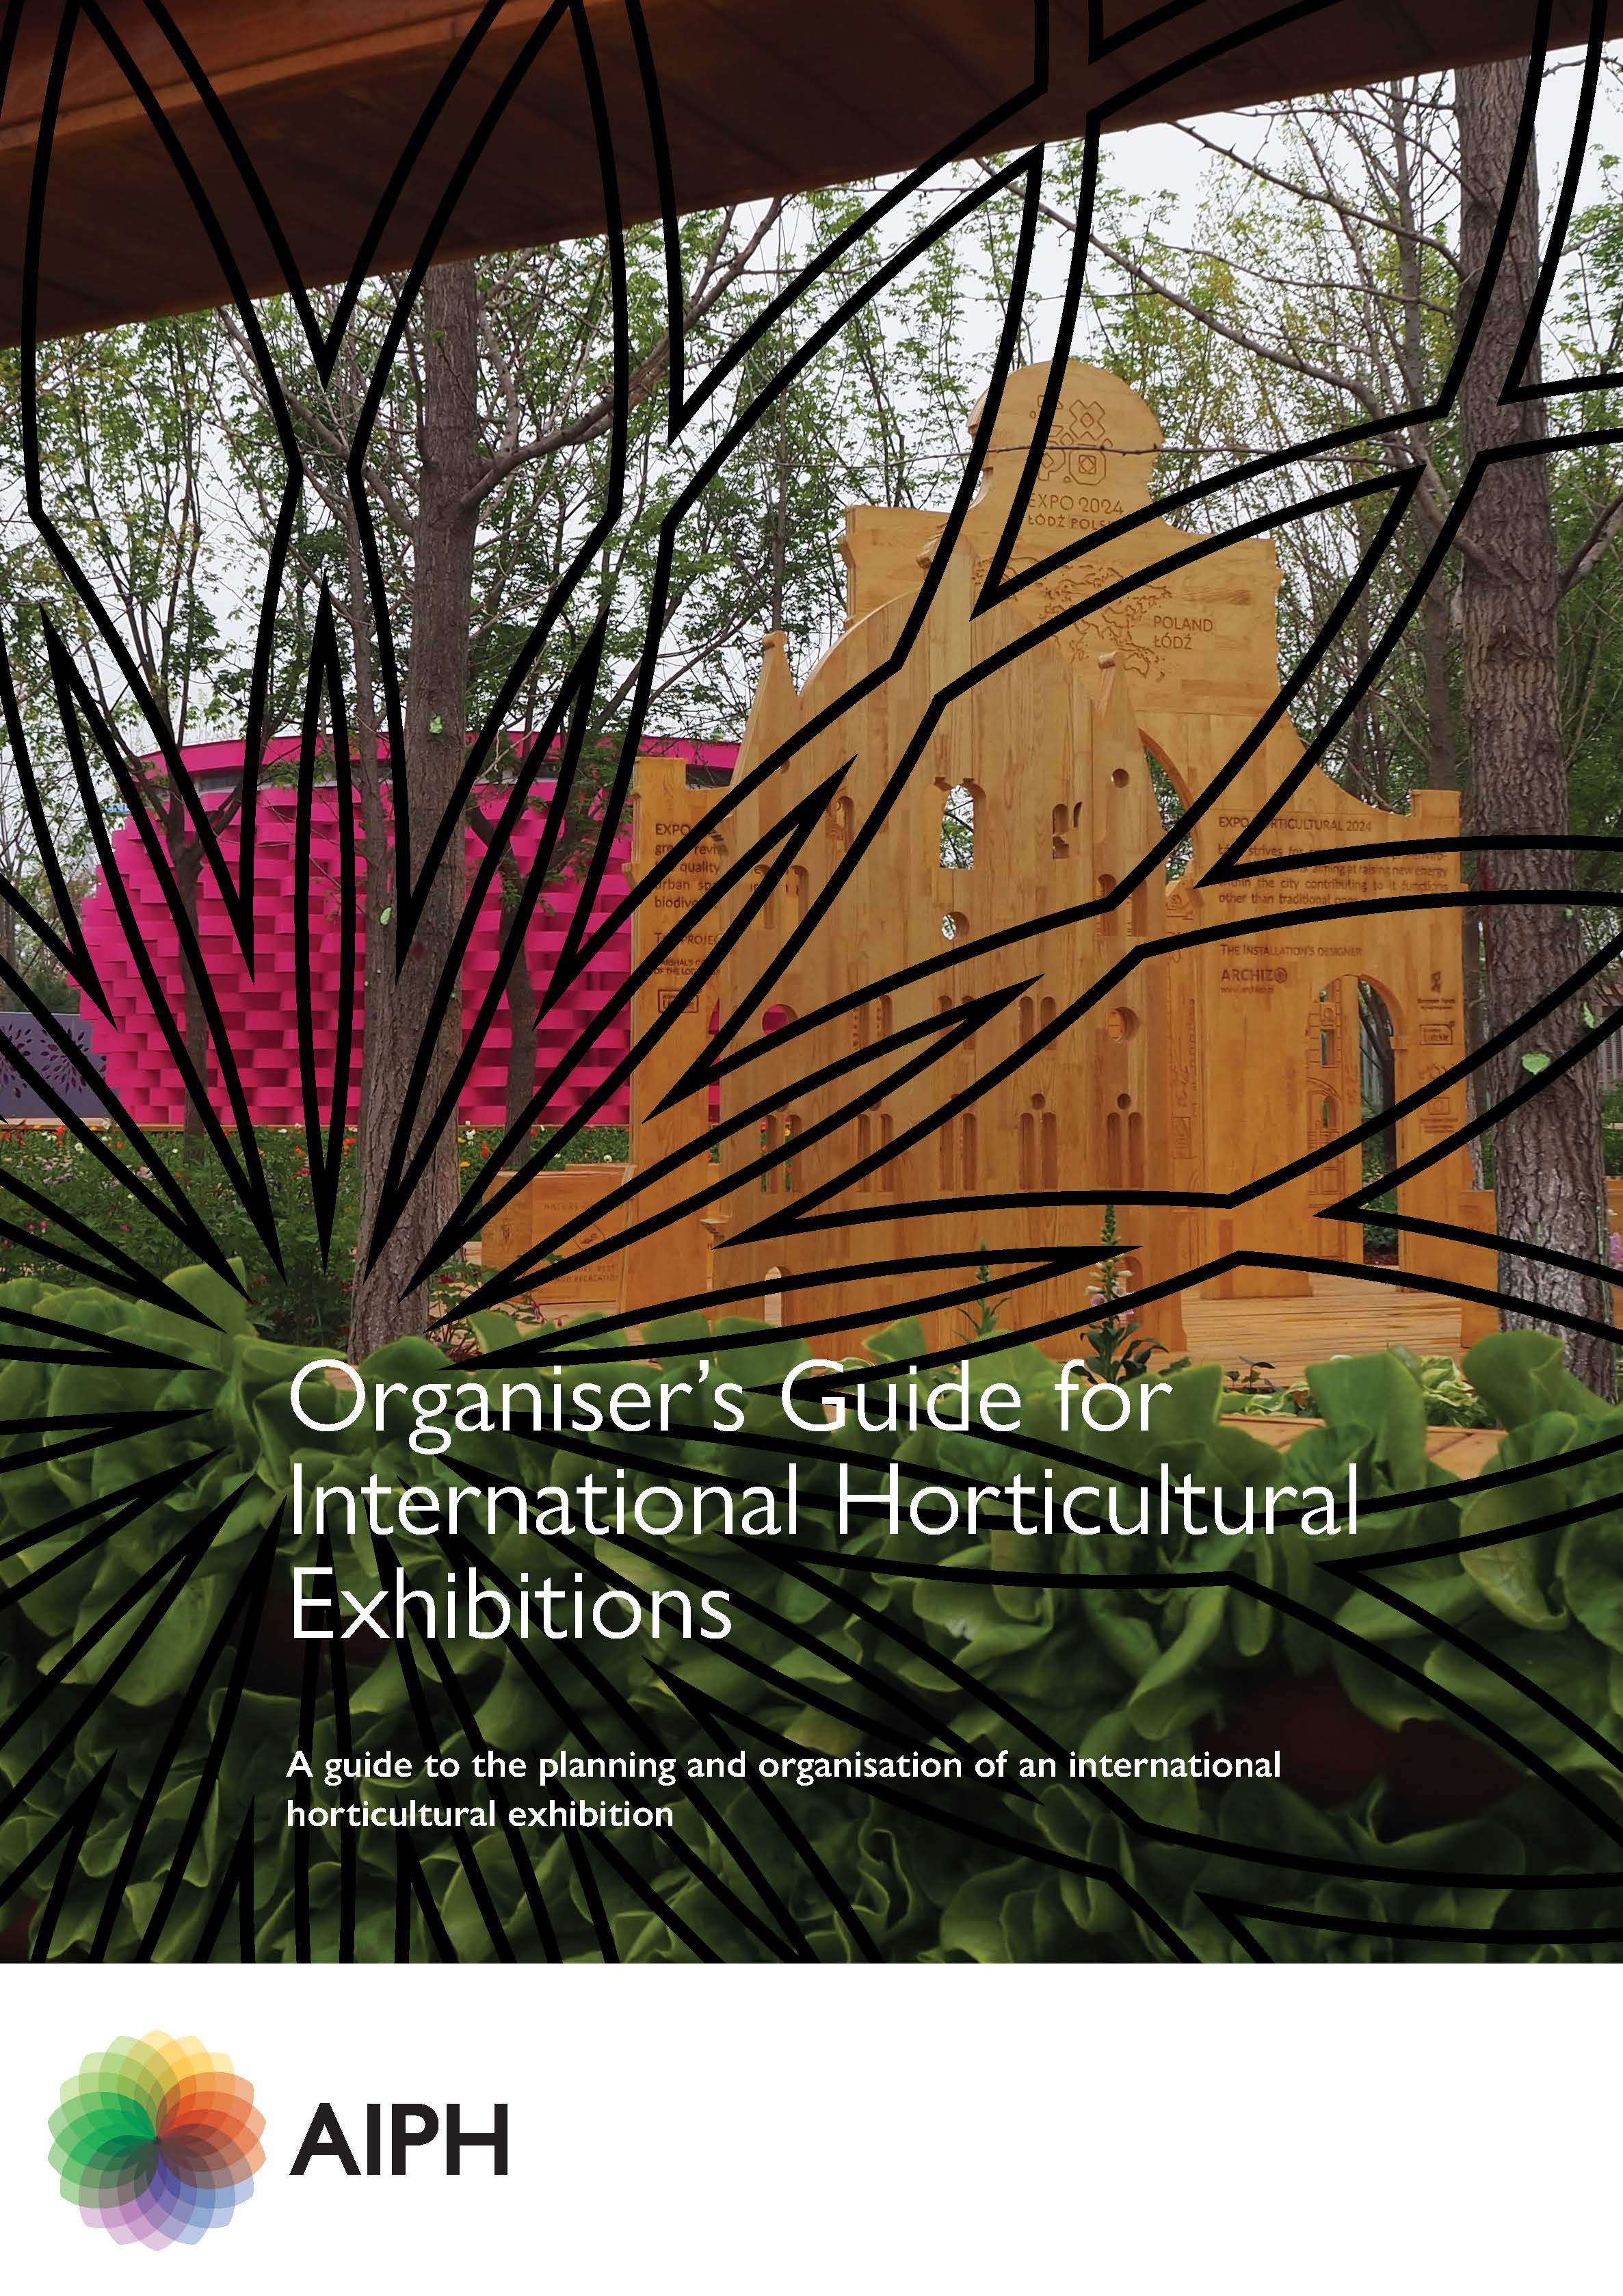 International Horticultural Exhibitions International Association of